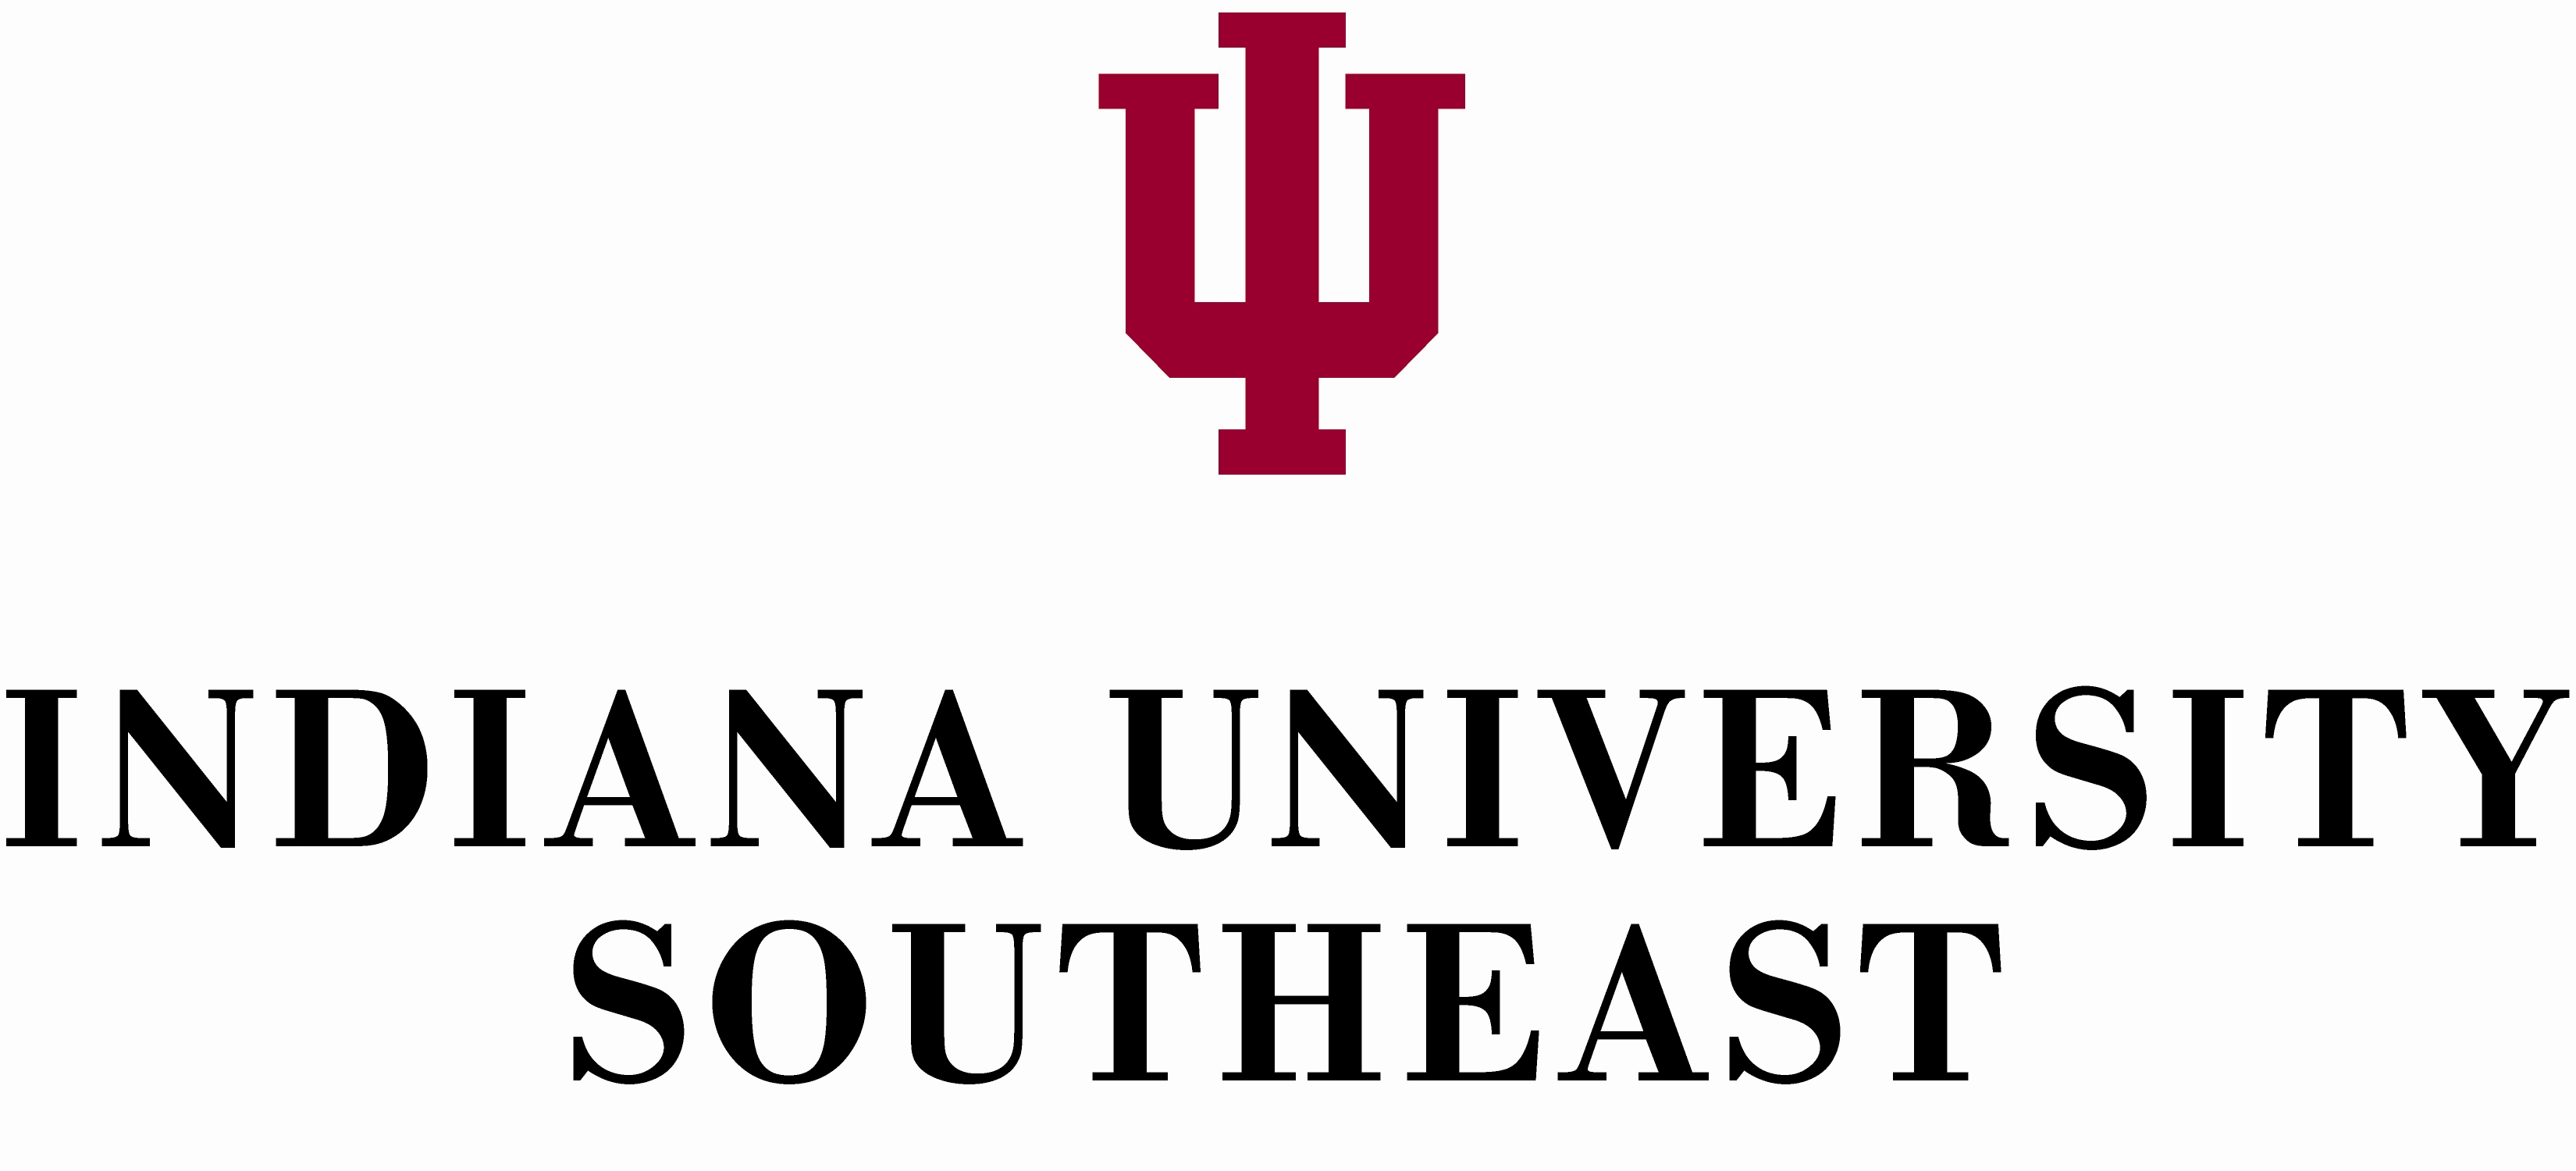 Indiana University Southeast Company Logo